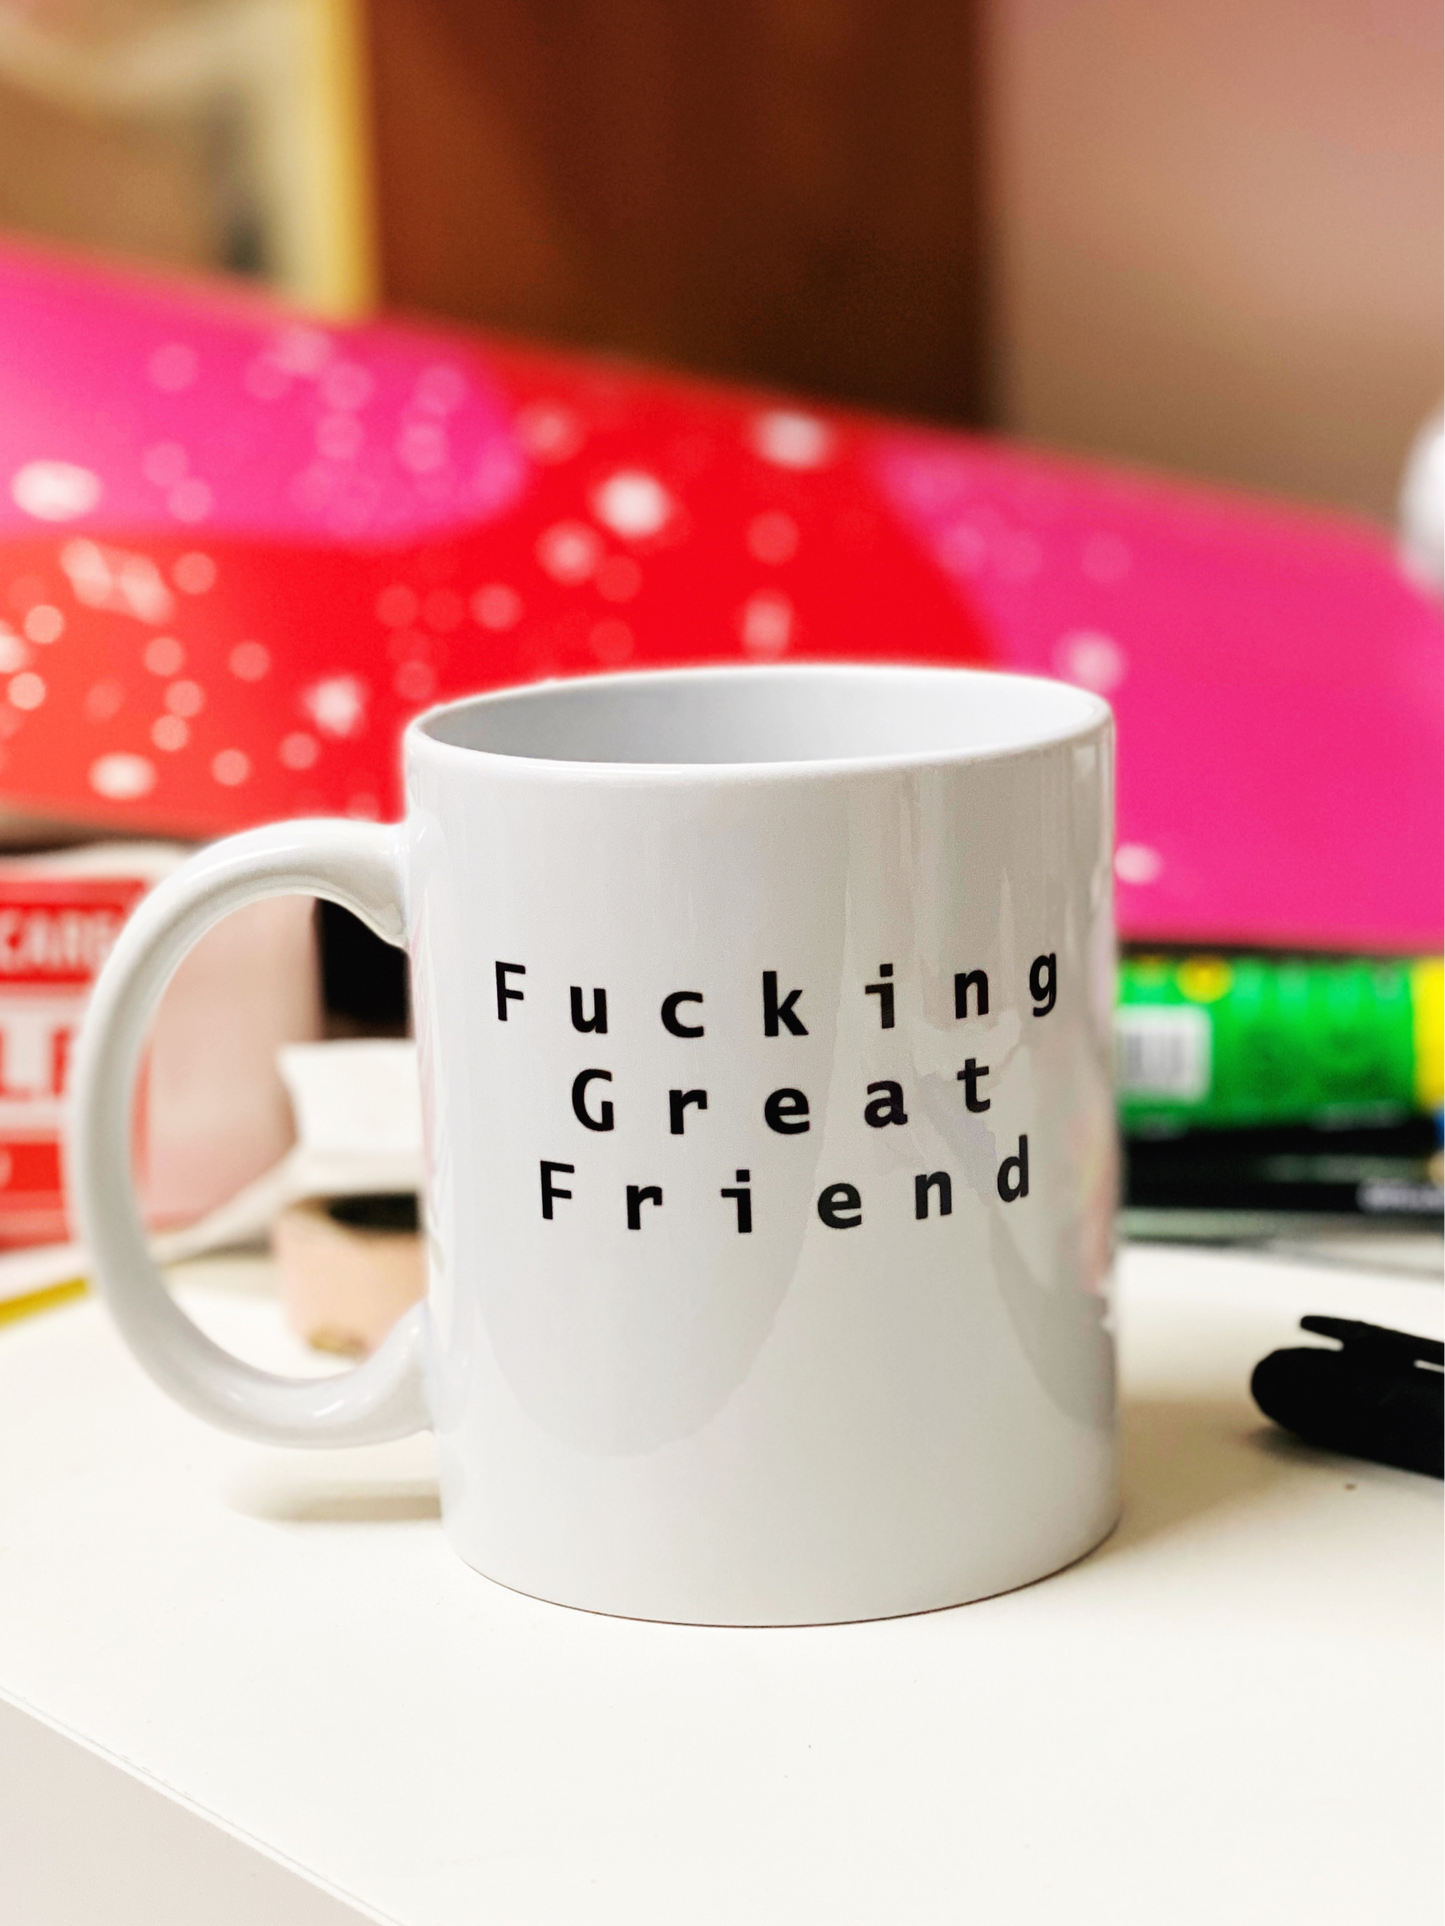 Great friend mug